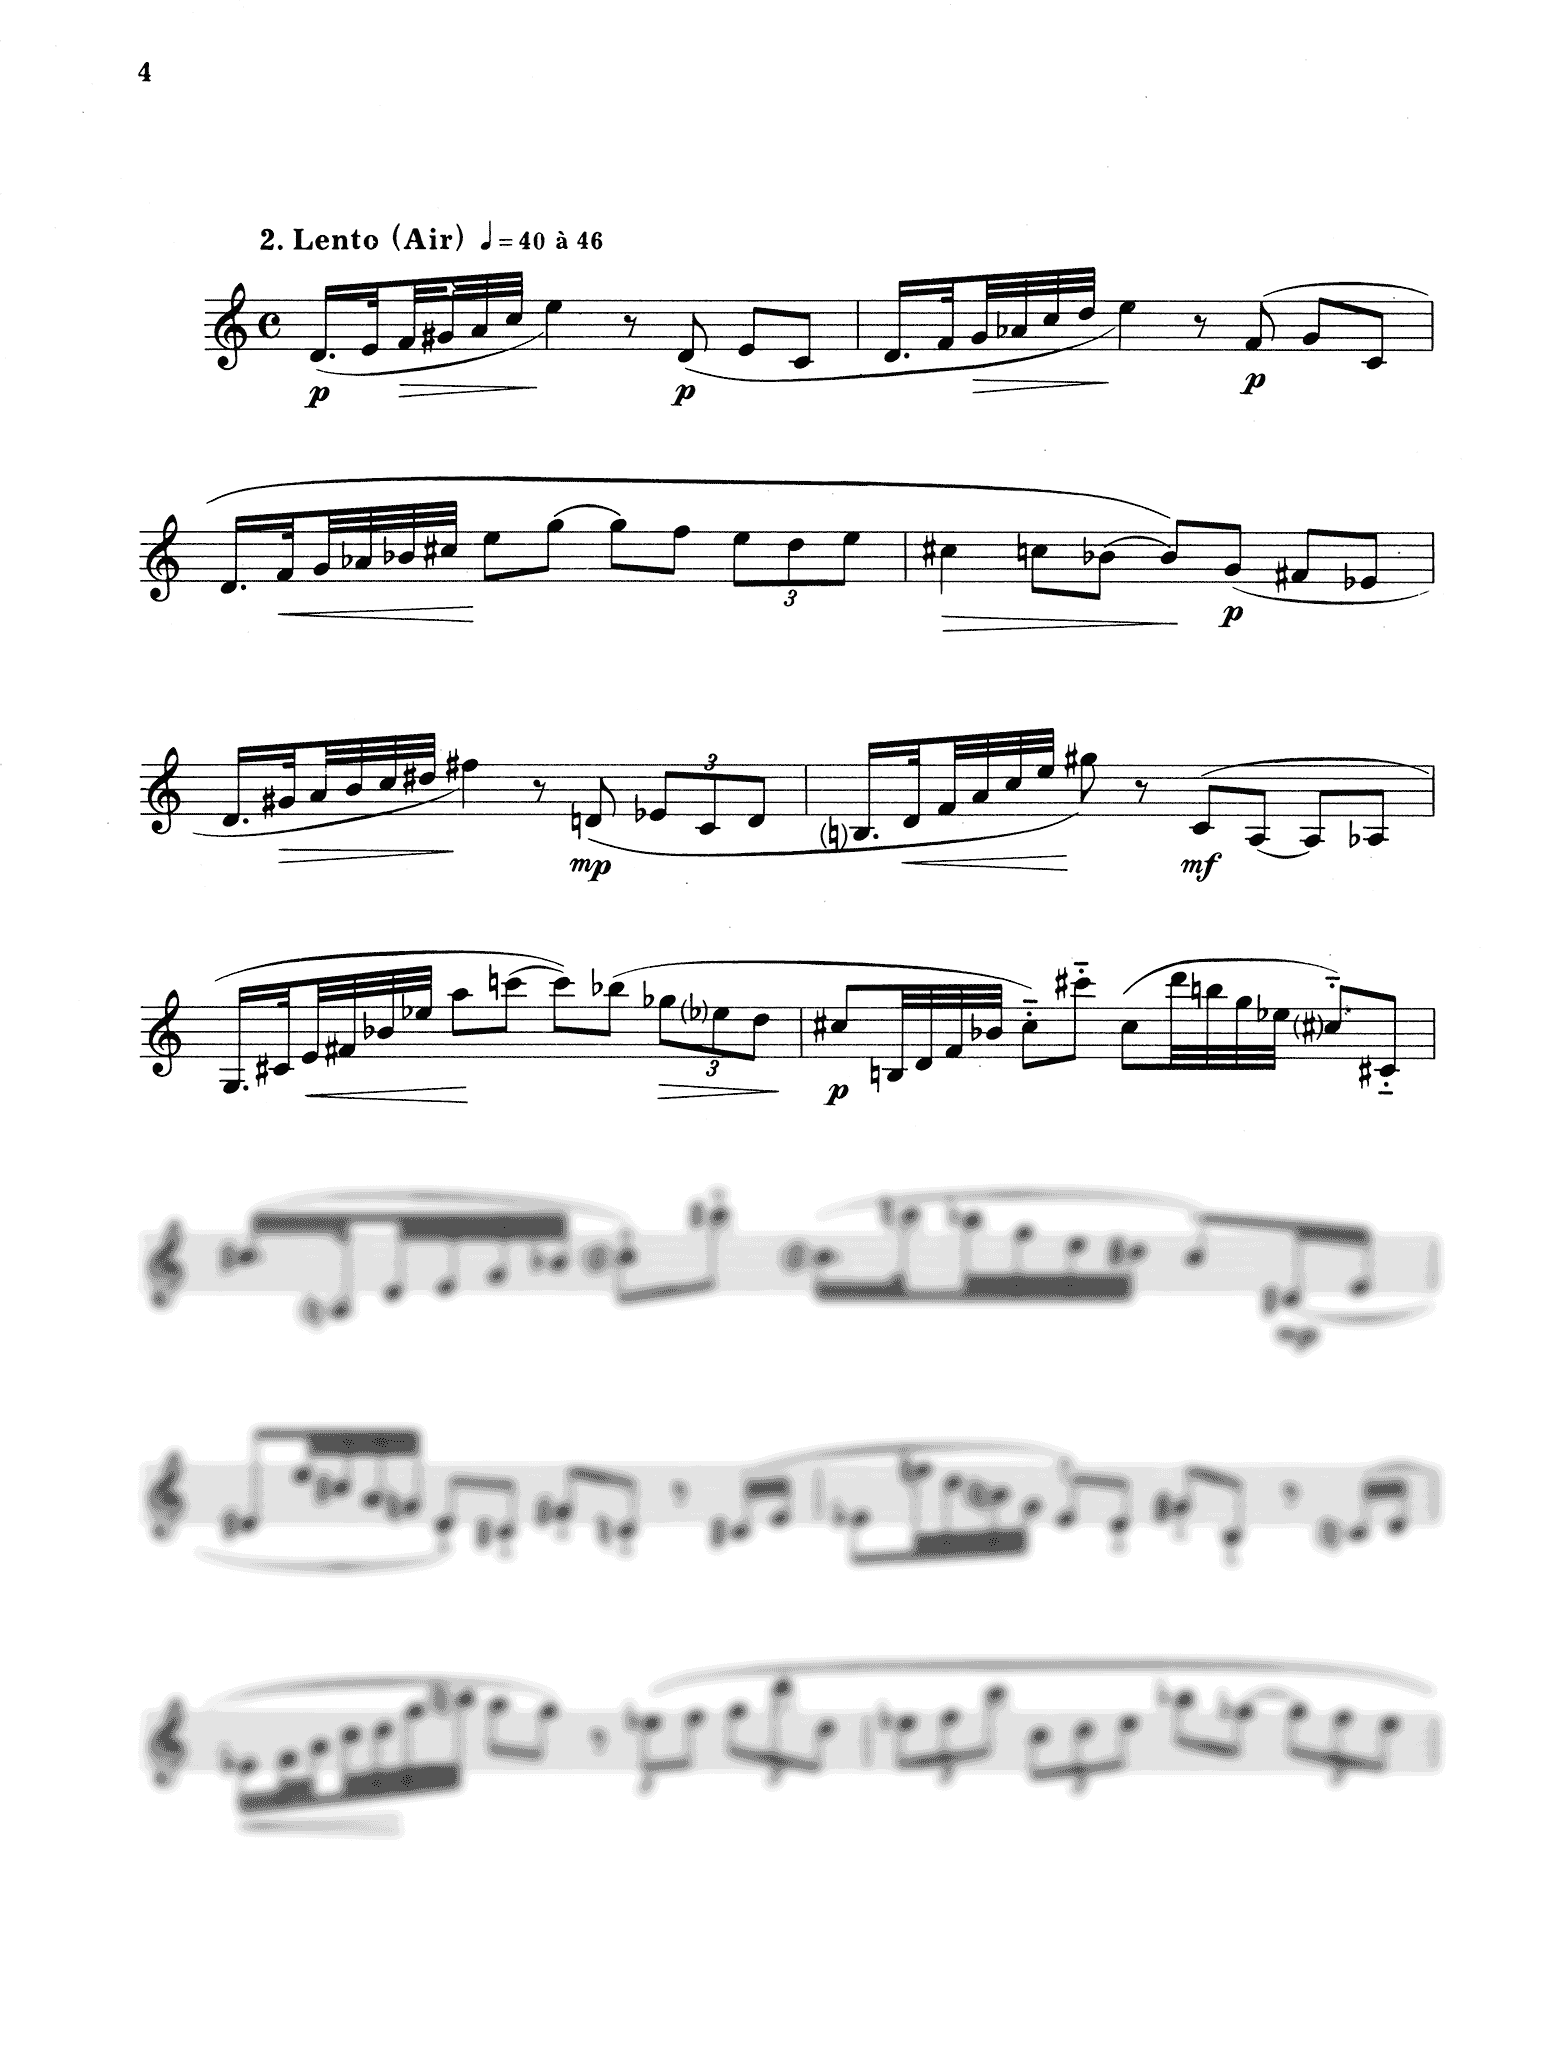 Raffaele d’Alessandro Suite for Solo Clarinet, Op. 64 - Movement 2